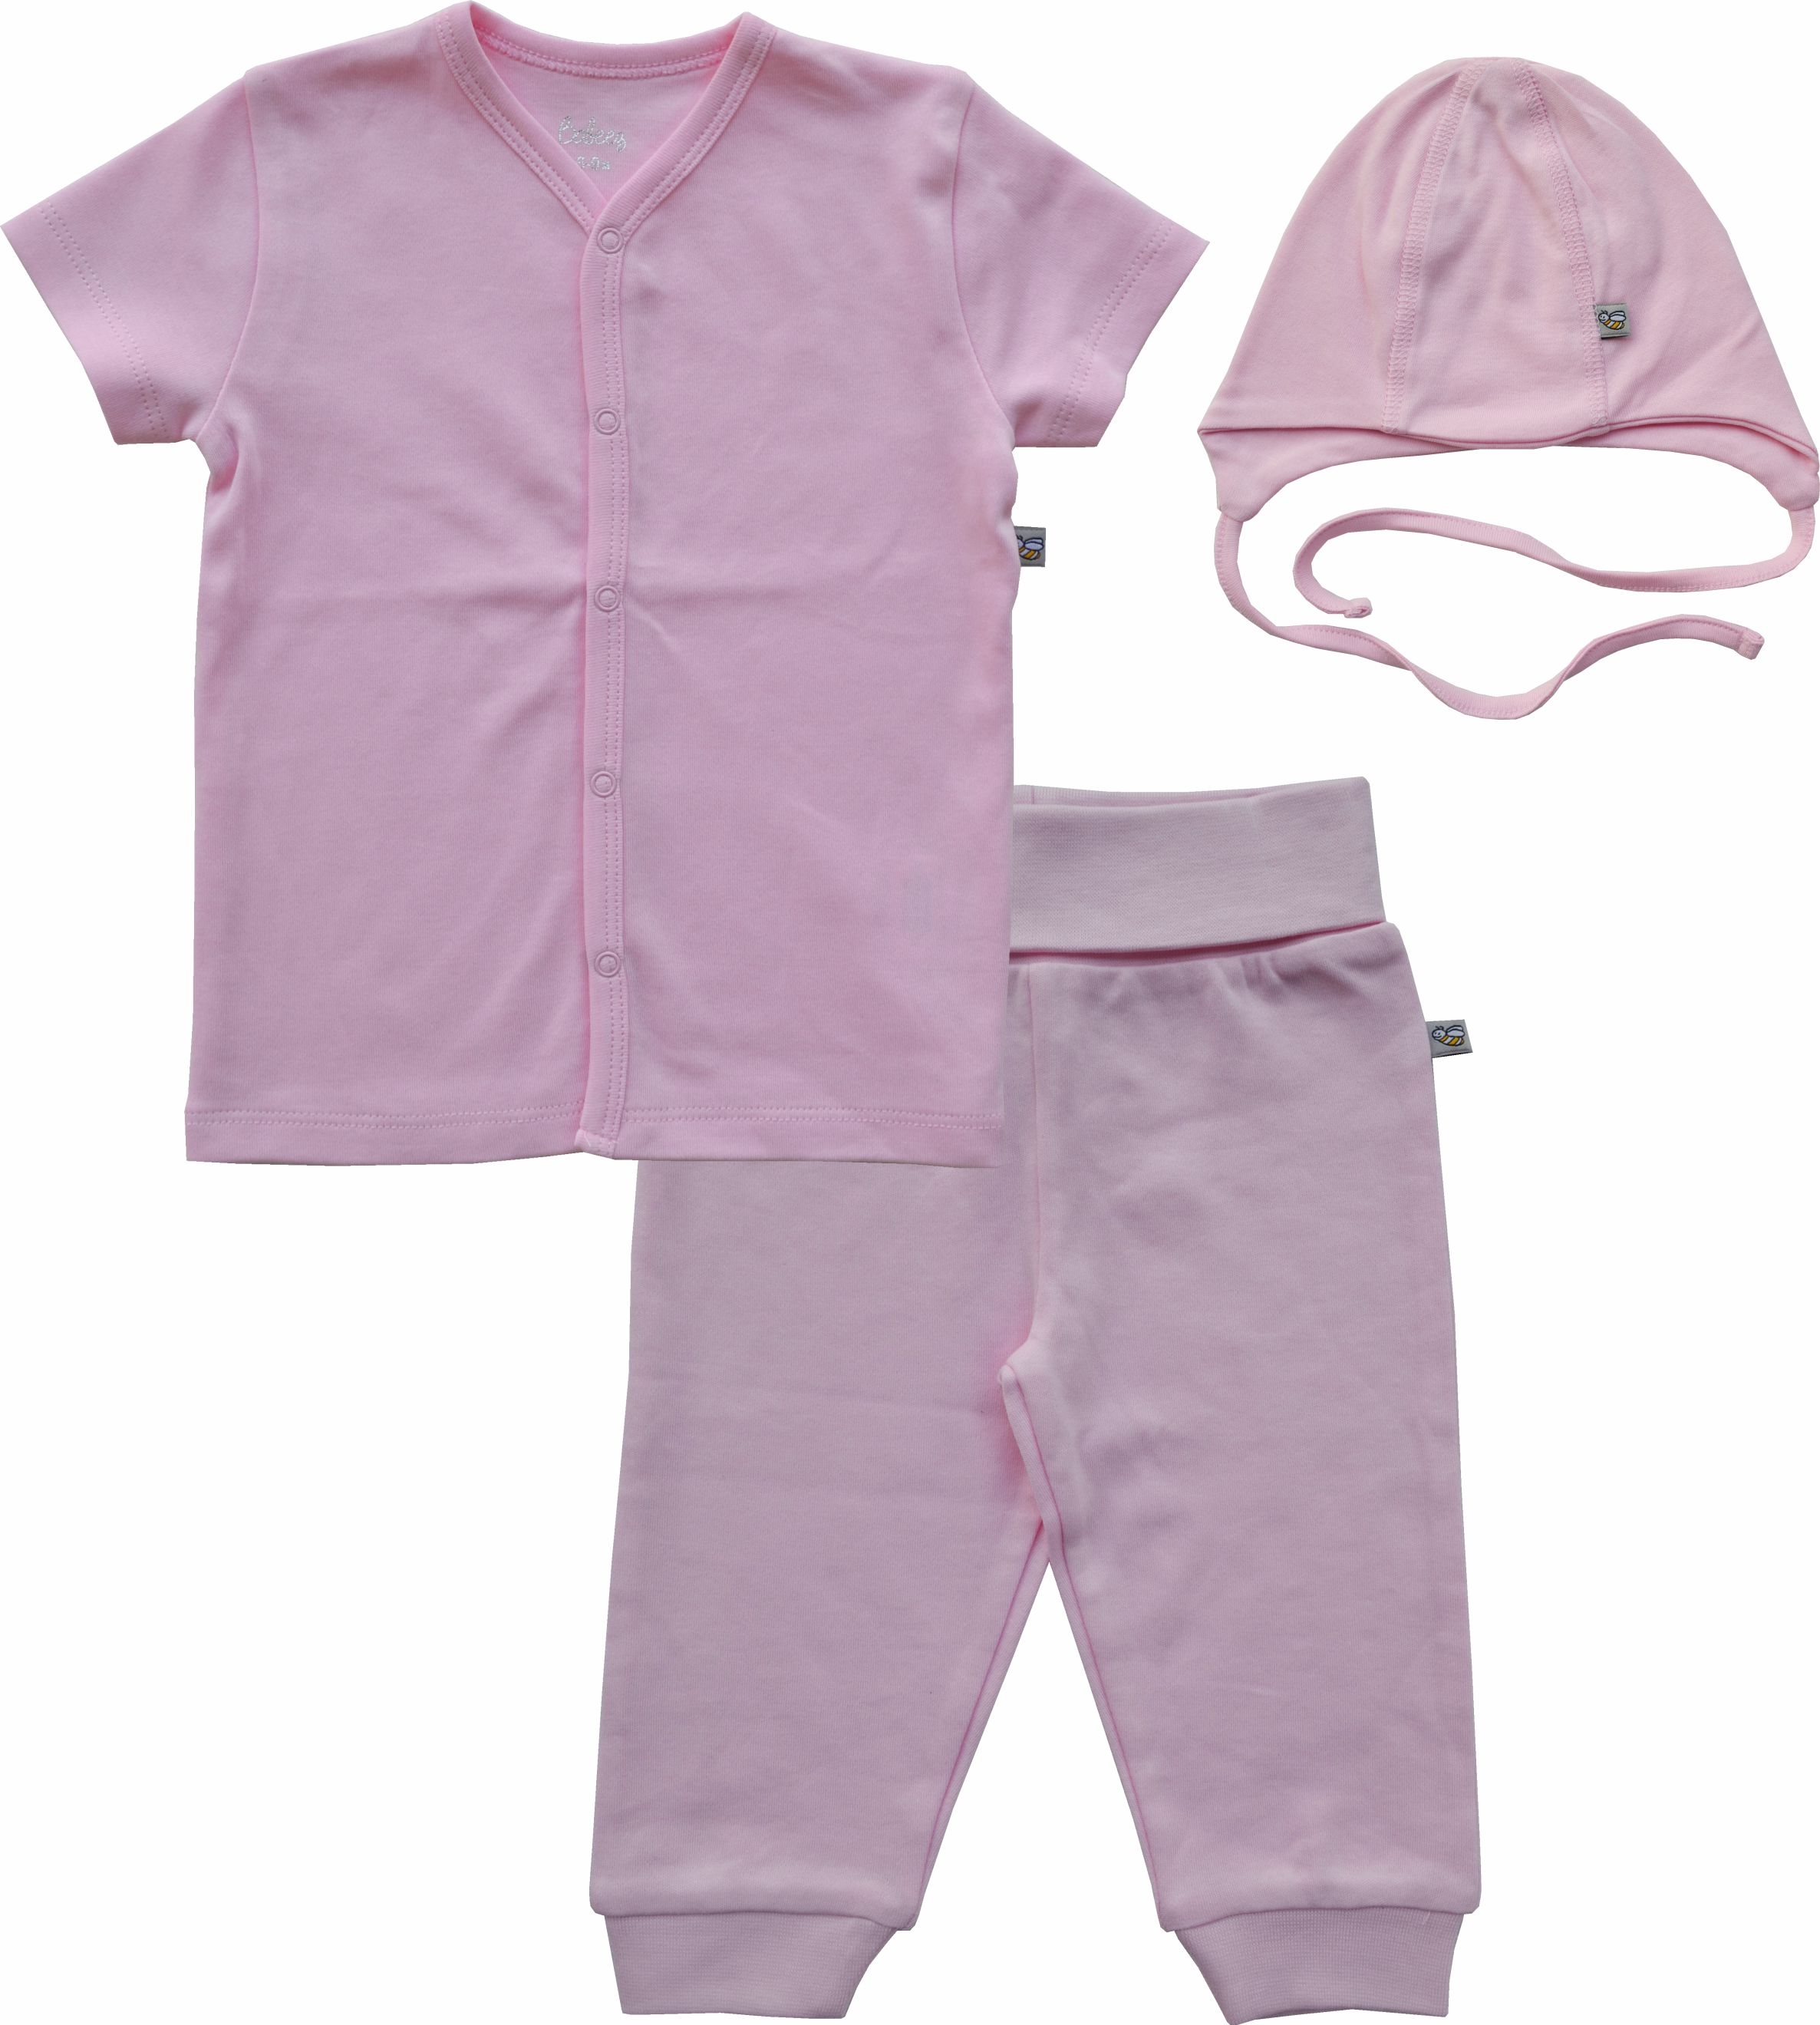 Pink Short Sleeve Top+Pink Pant+Pink CapSet (100% Cotton Interlock Biowash)